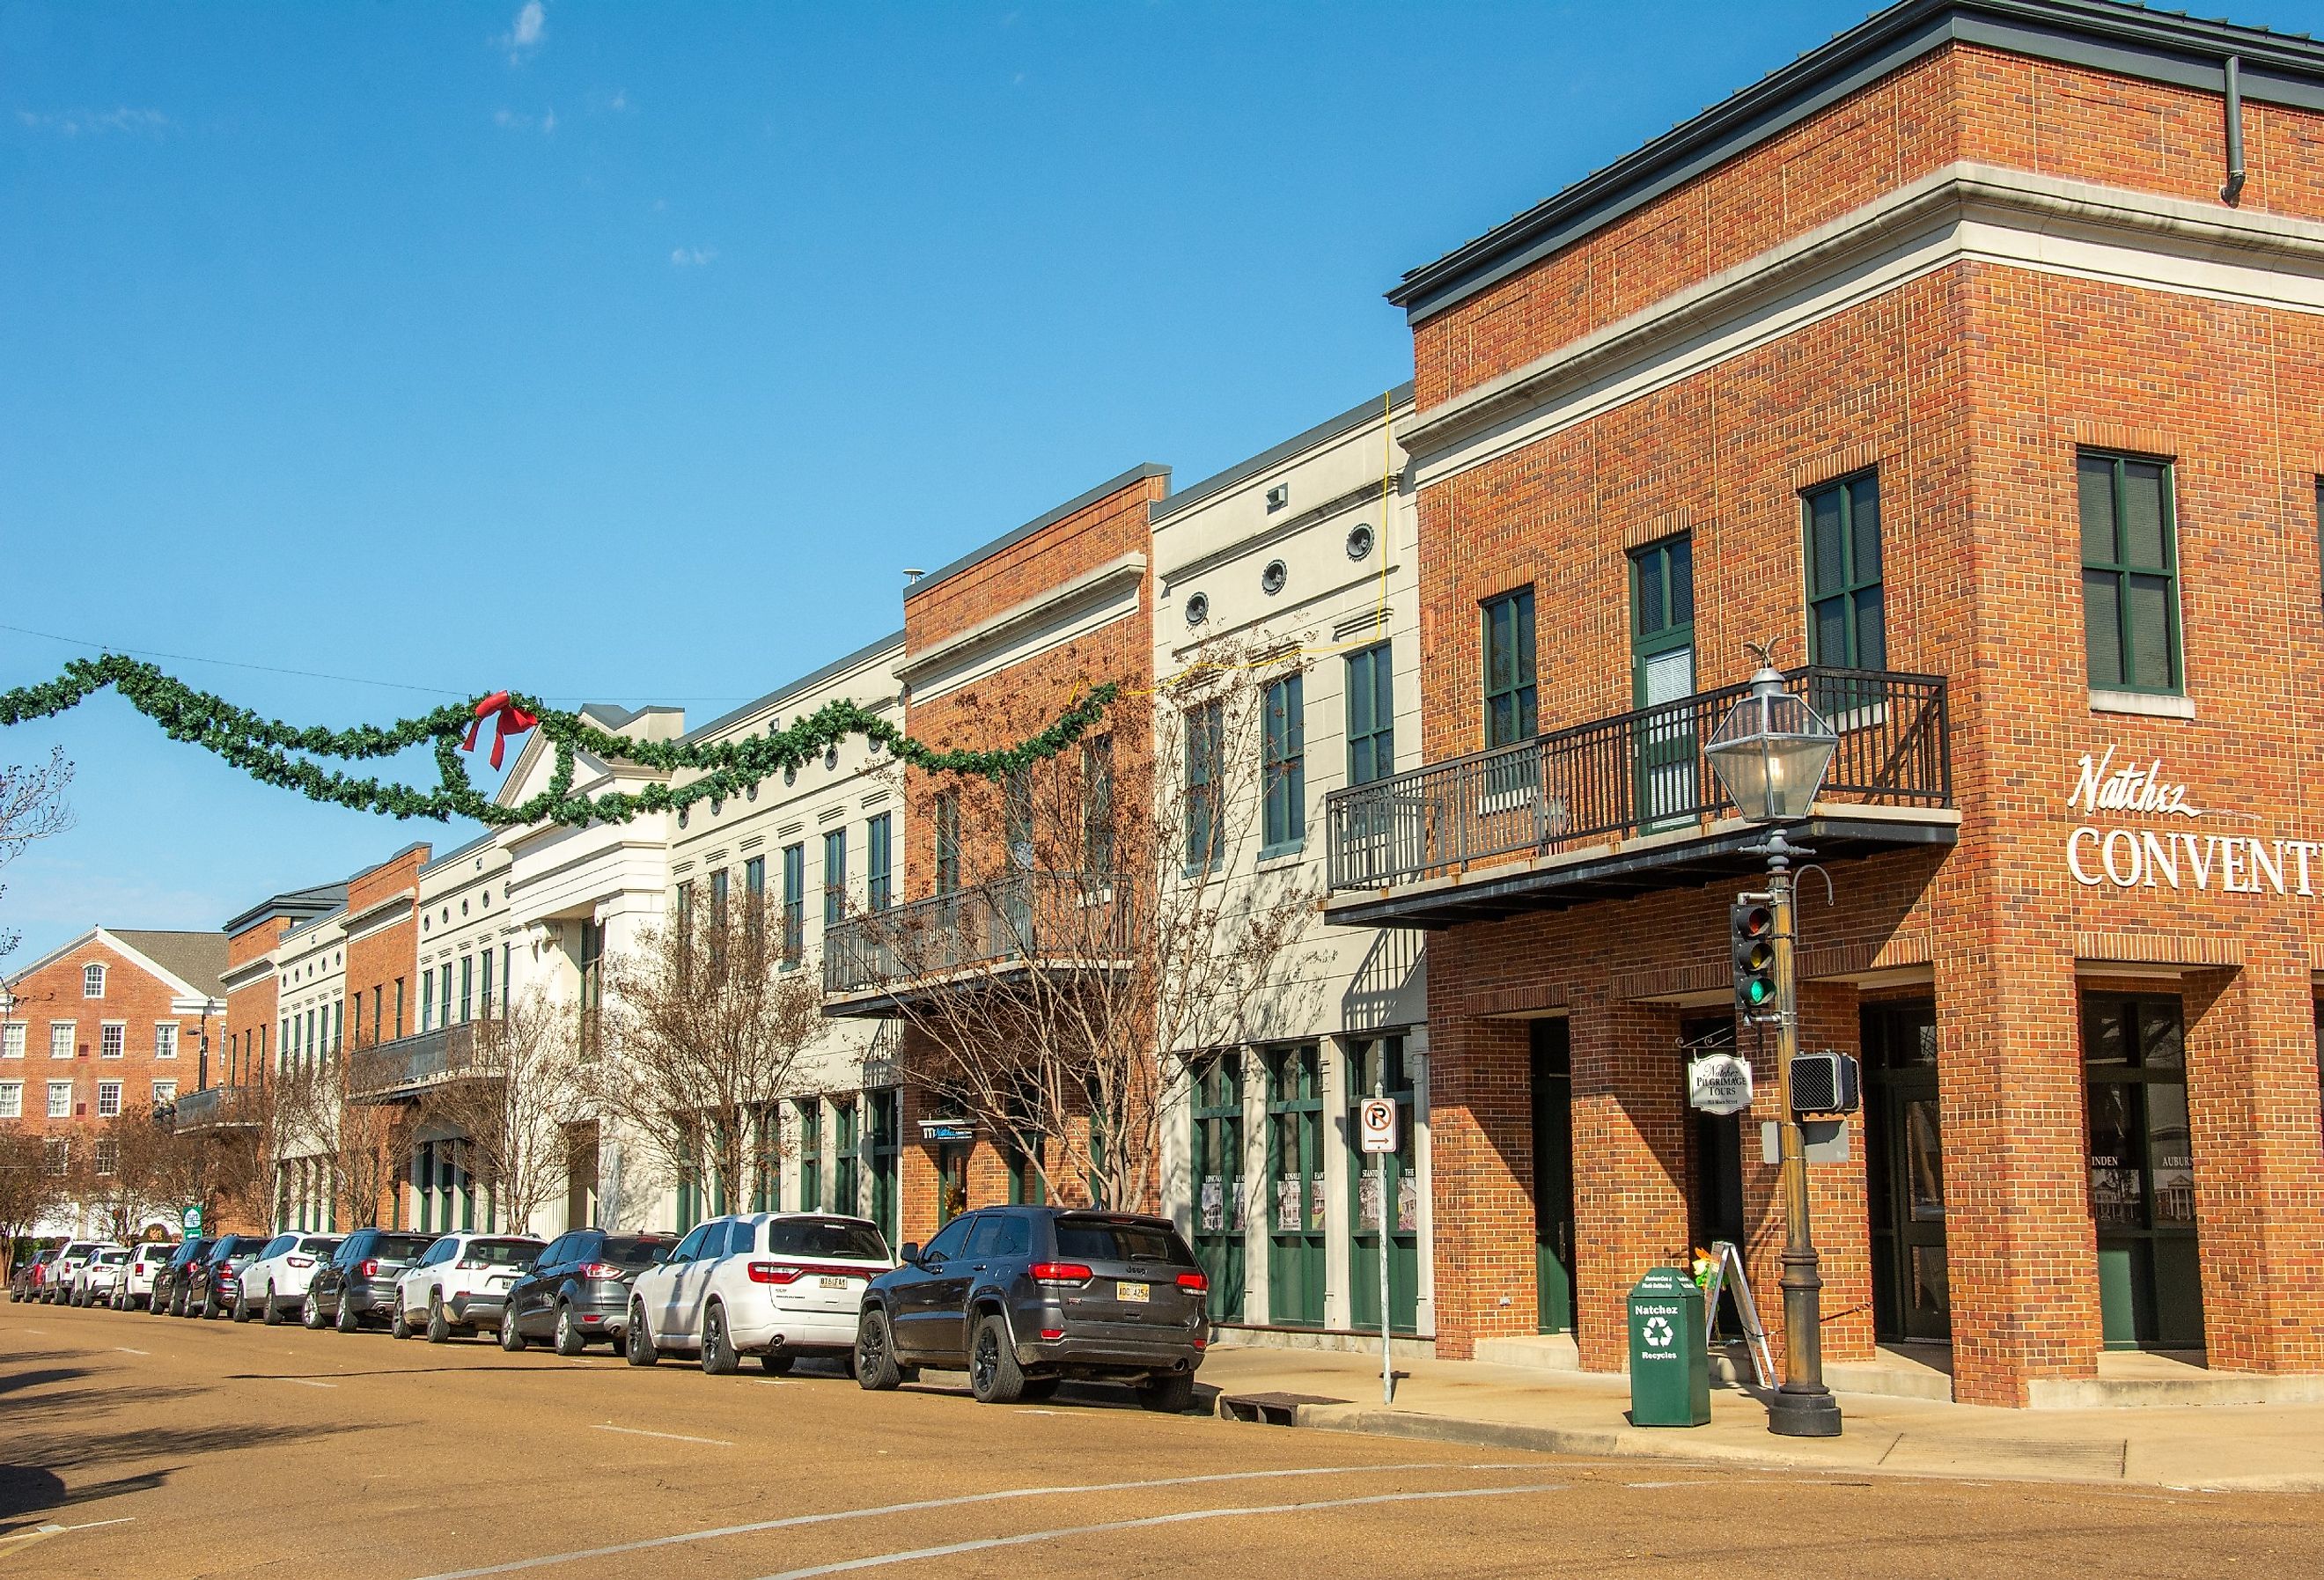 Historic Natchez Main Street with Convention Center in Natchez, Mississippi. Image credit Nina Alizada via Shutterstock